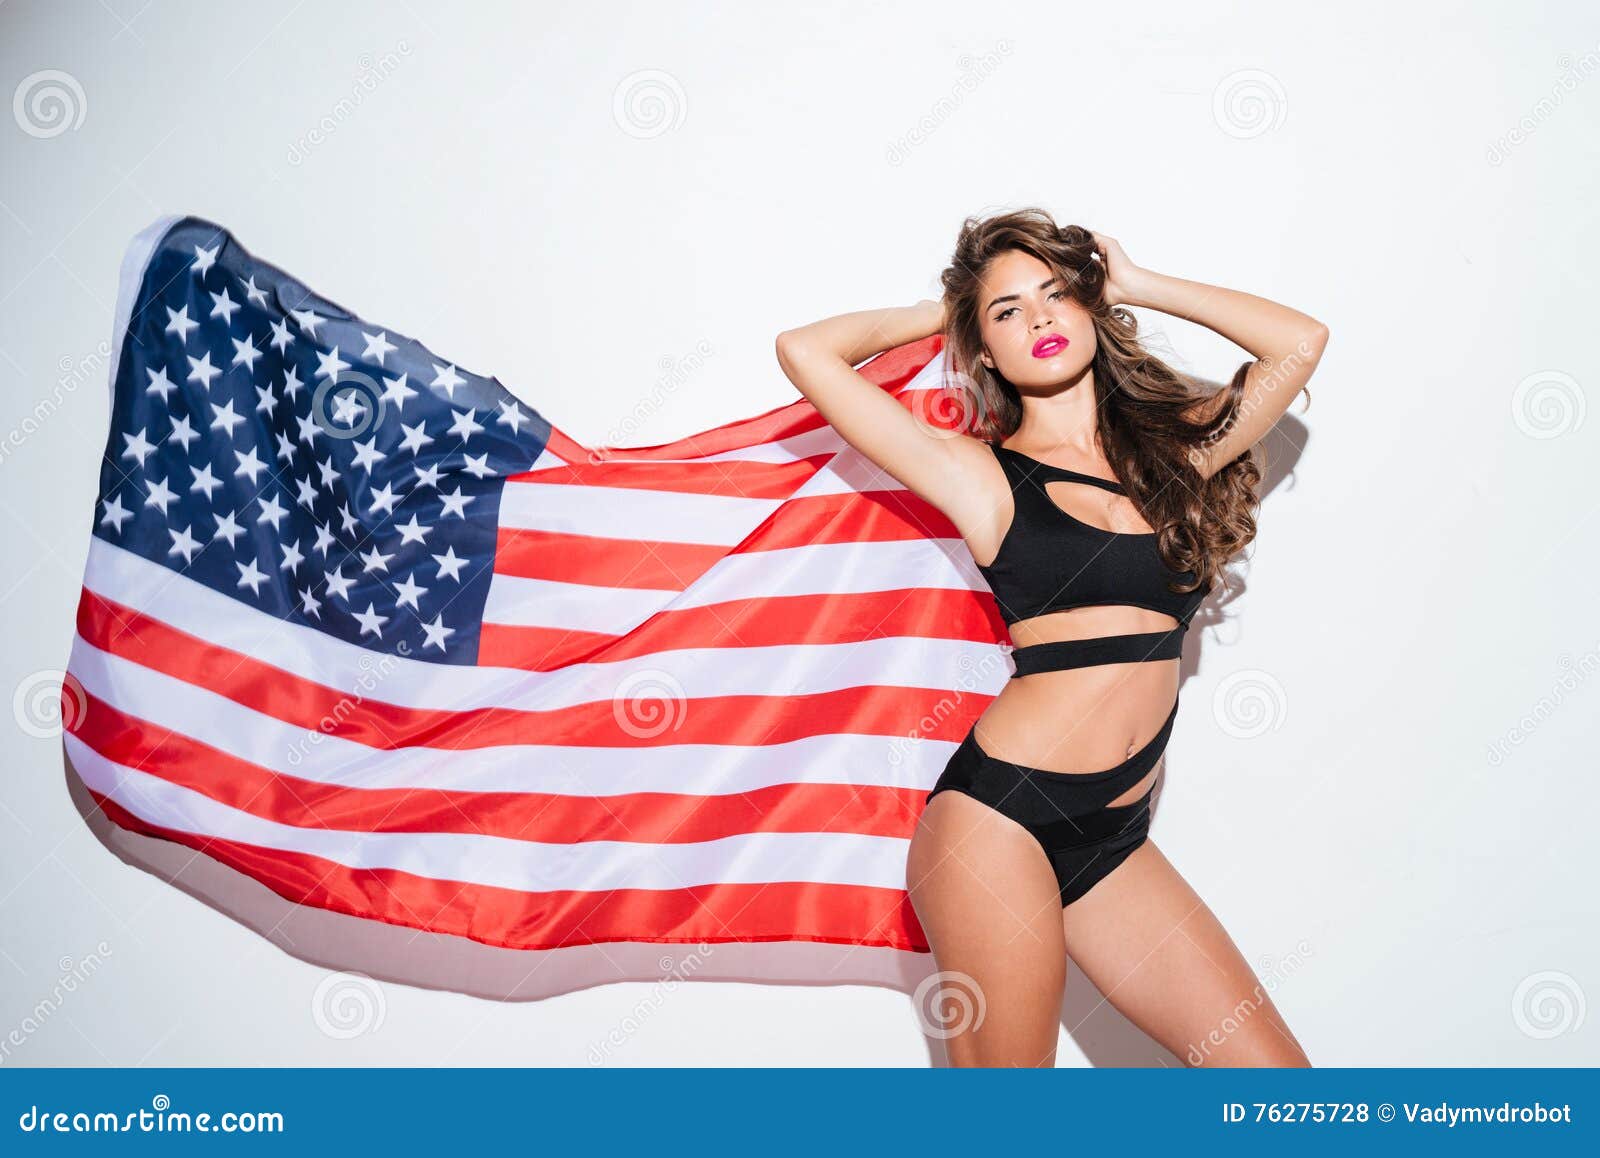 America Sexy 117